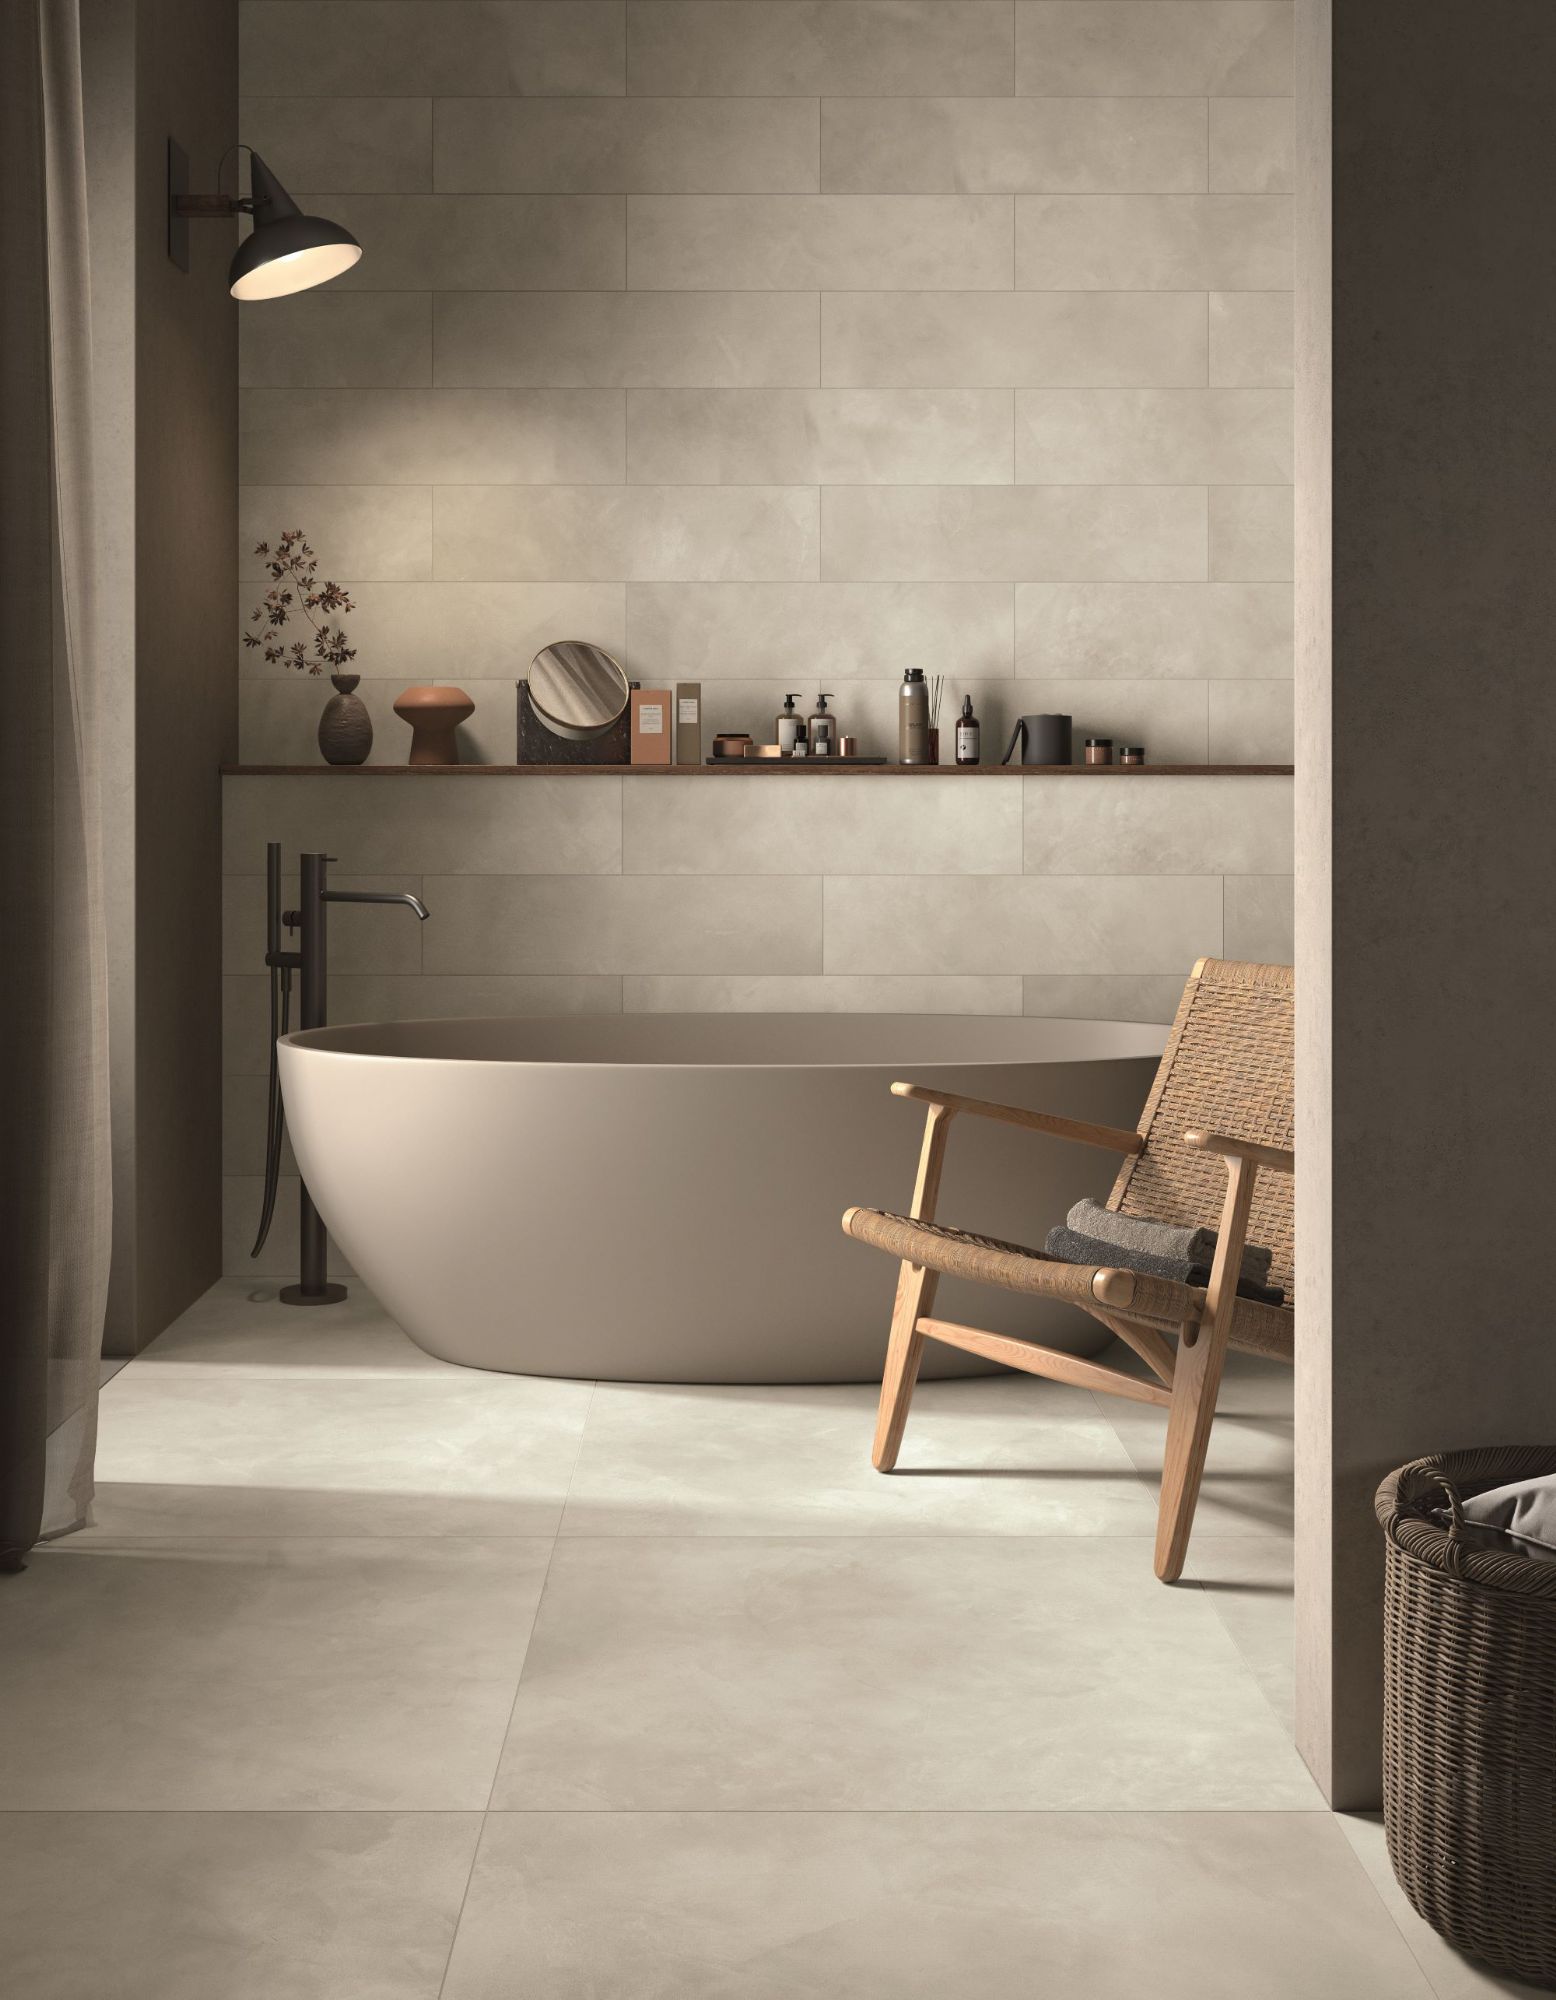 Design Tips For Choosing Bathroom Tiles | Luxury Bathrooms | C.P. Hart Blog